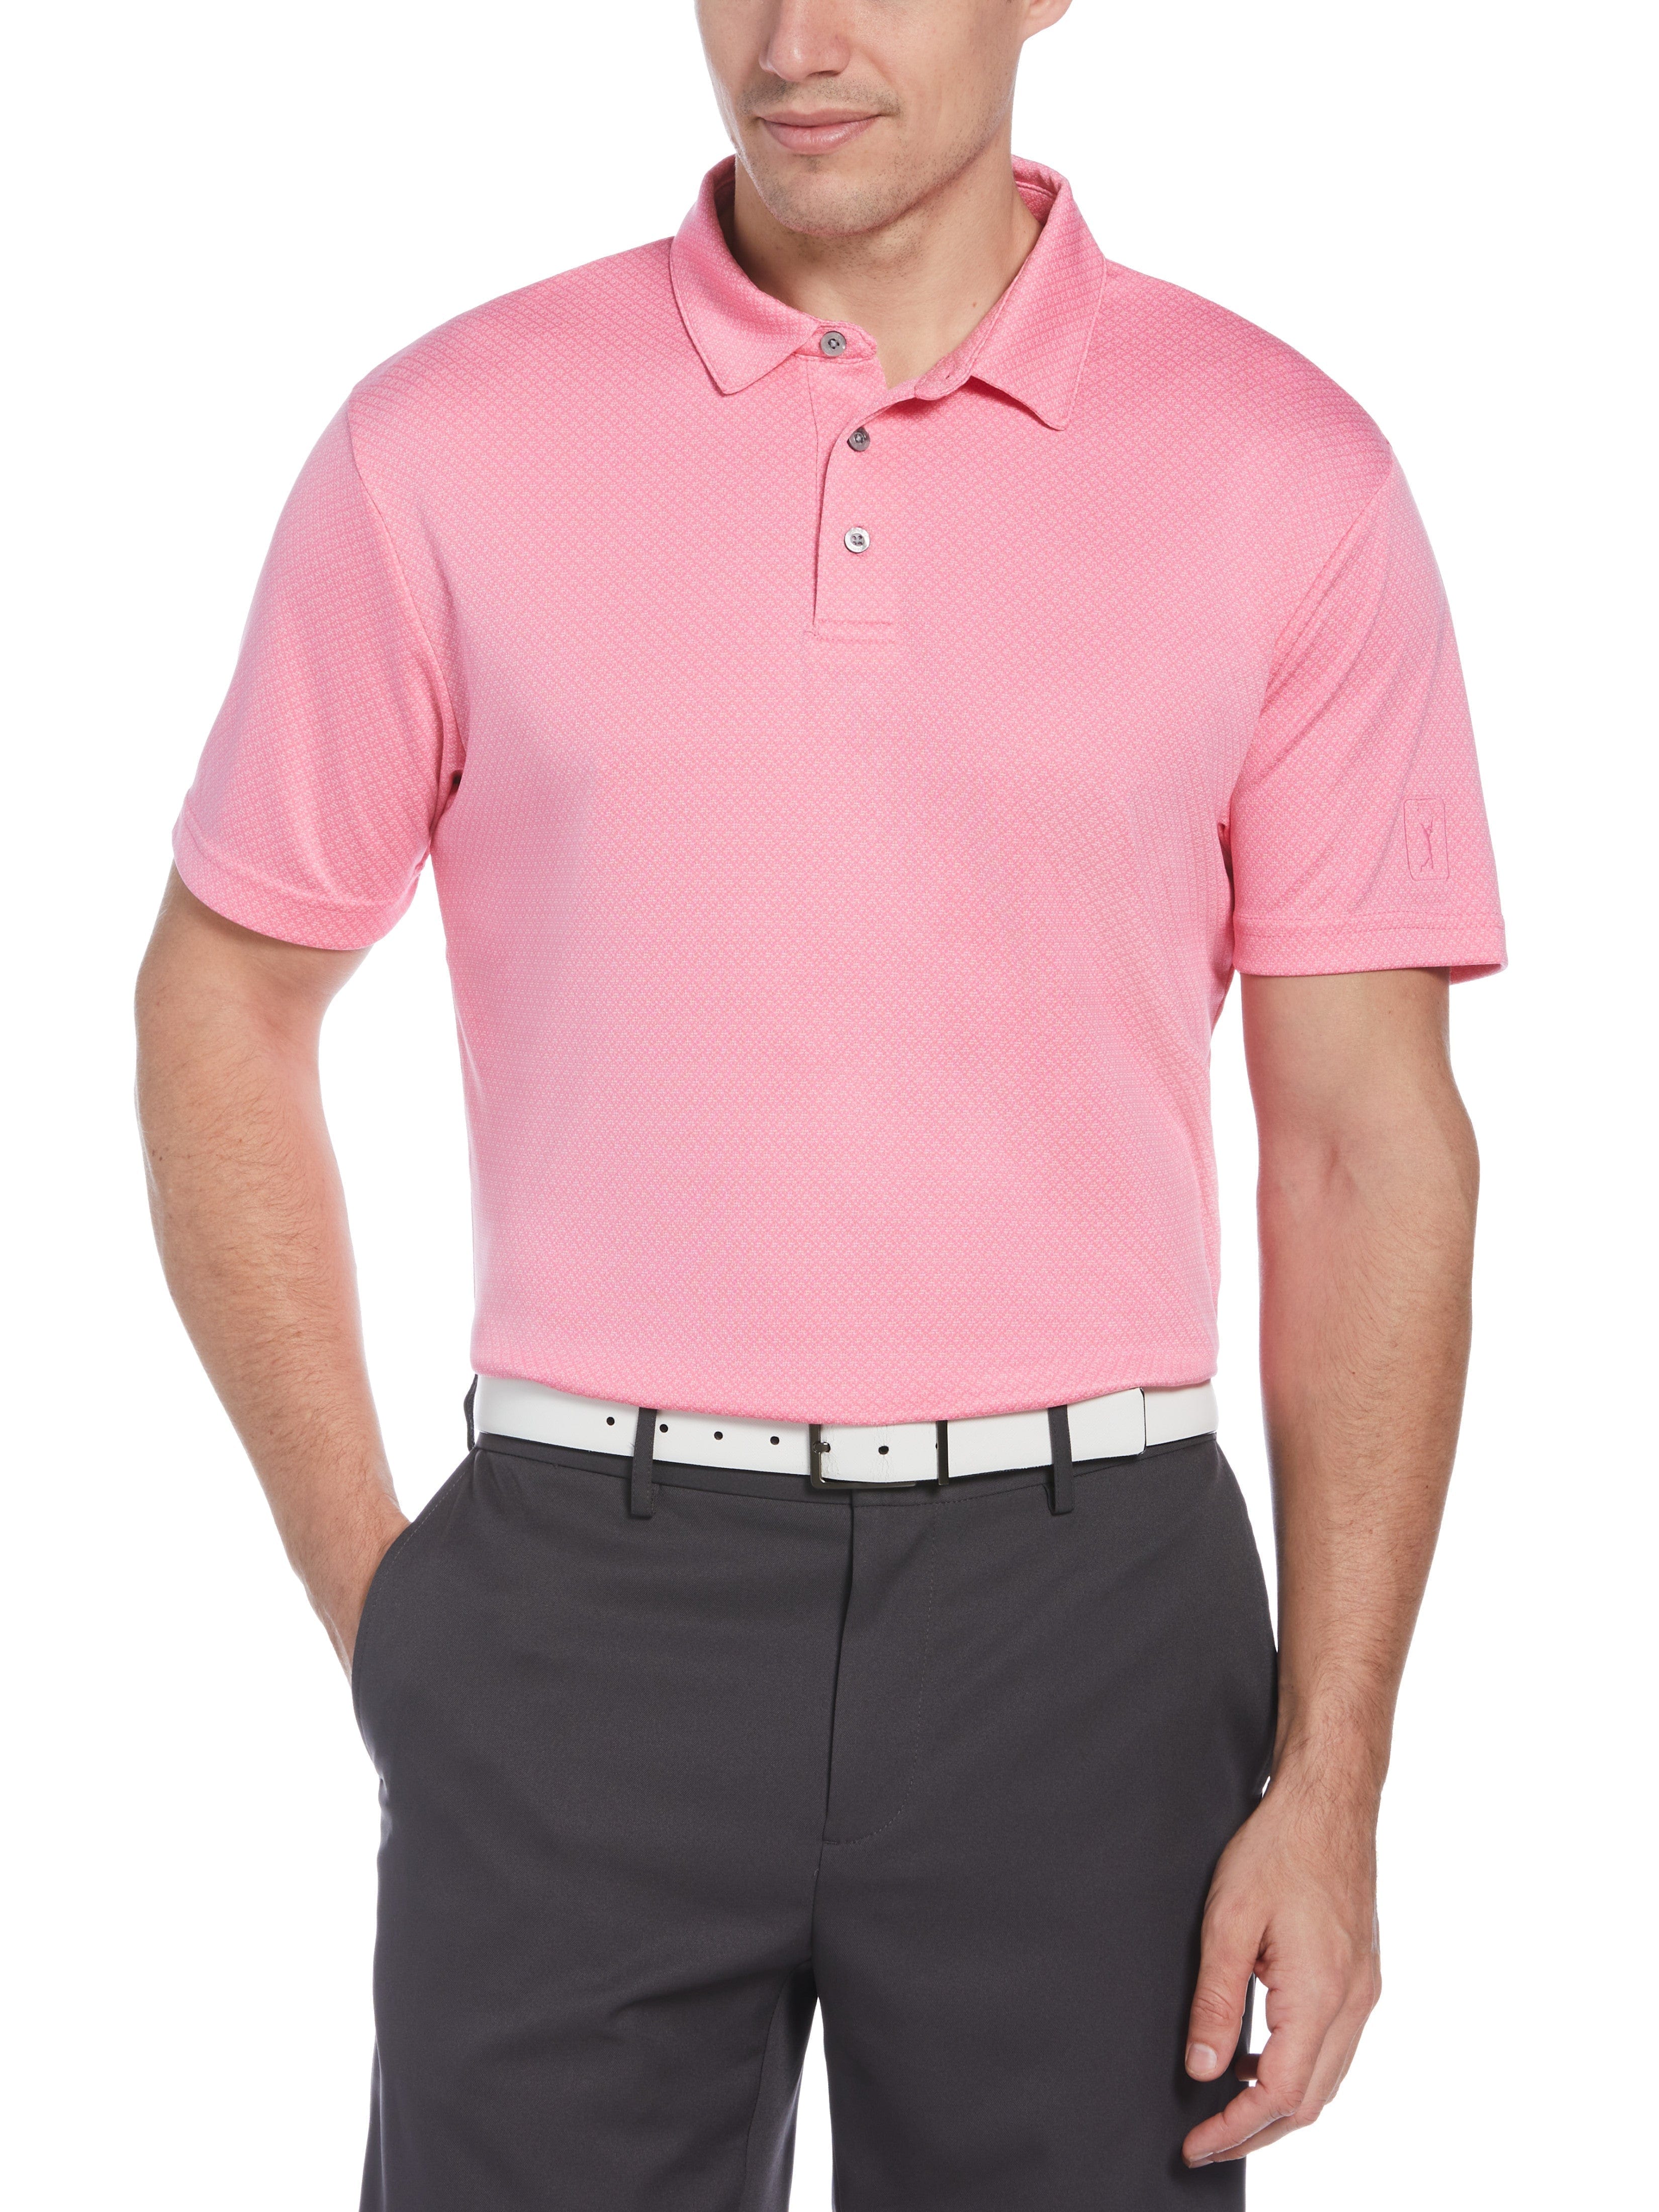 PGA TOUR Apparel Mens Big & Tall Micro Geo Jacquard Golf Polo Shirt, Size 2X, Pink Carnation, 100% Polyester | Golf Apparel Shop